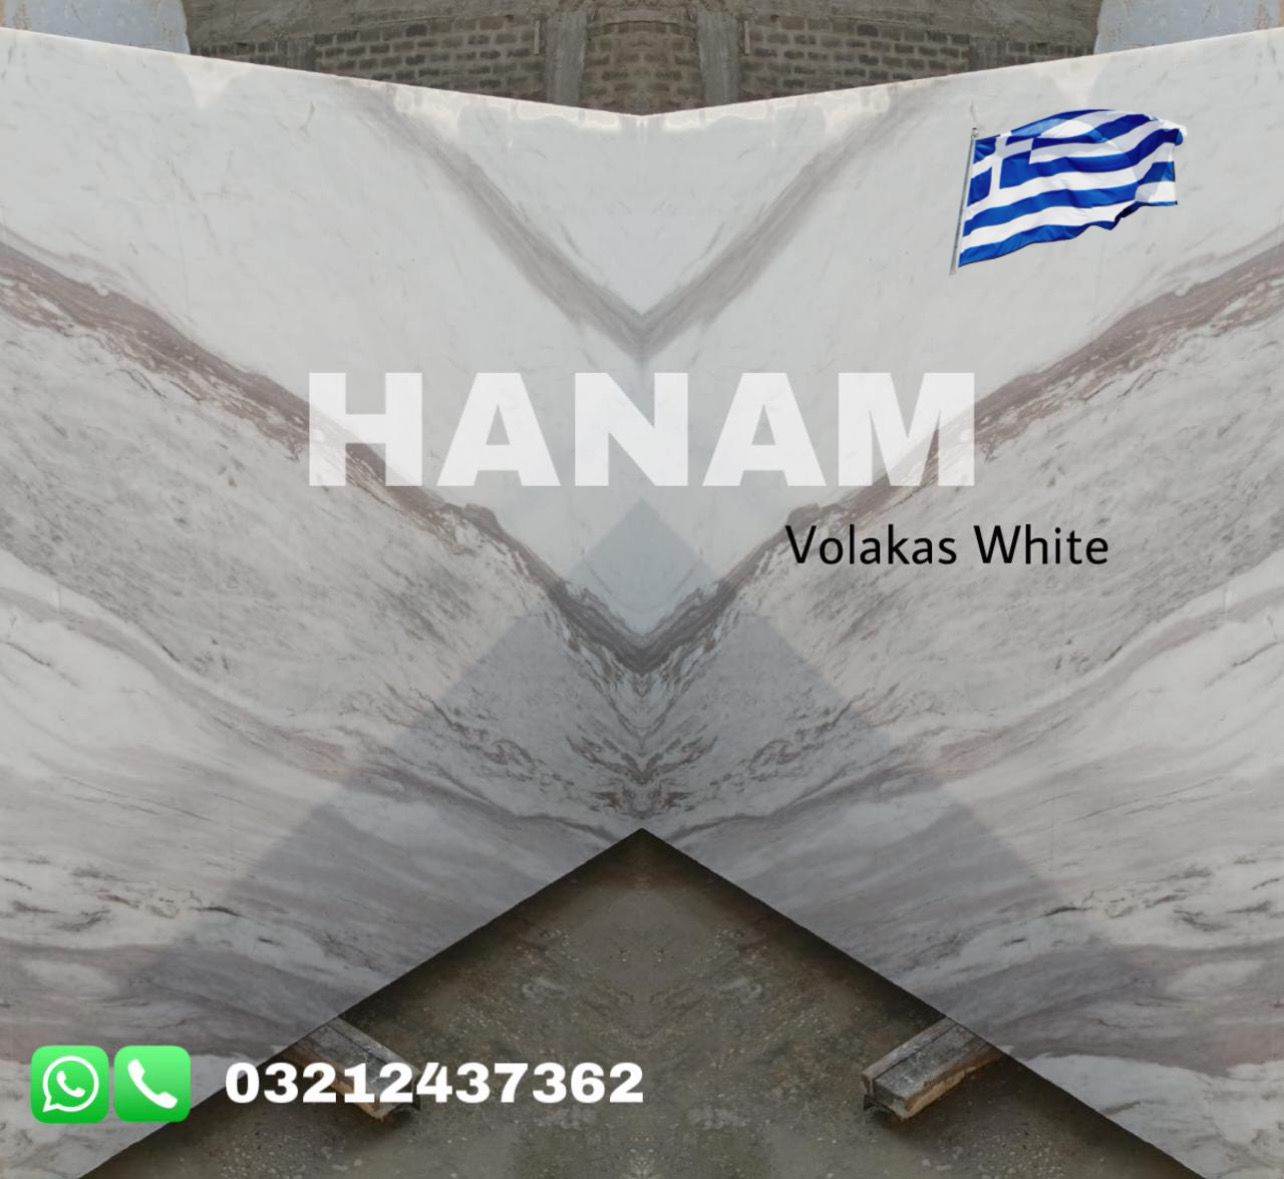 Volakas White Marble Pakistan 03212437362 - California - Corona ID1514983 2